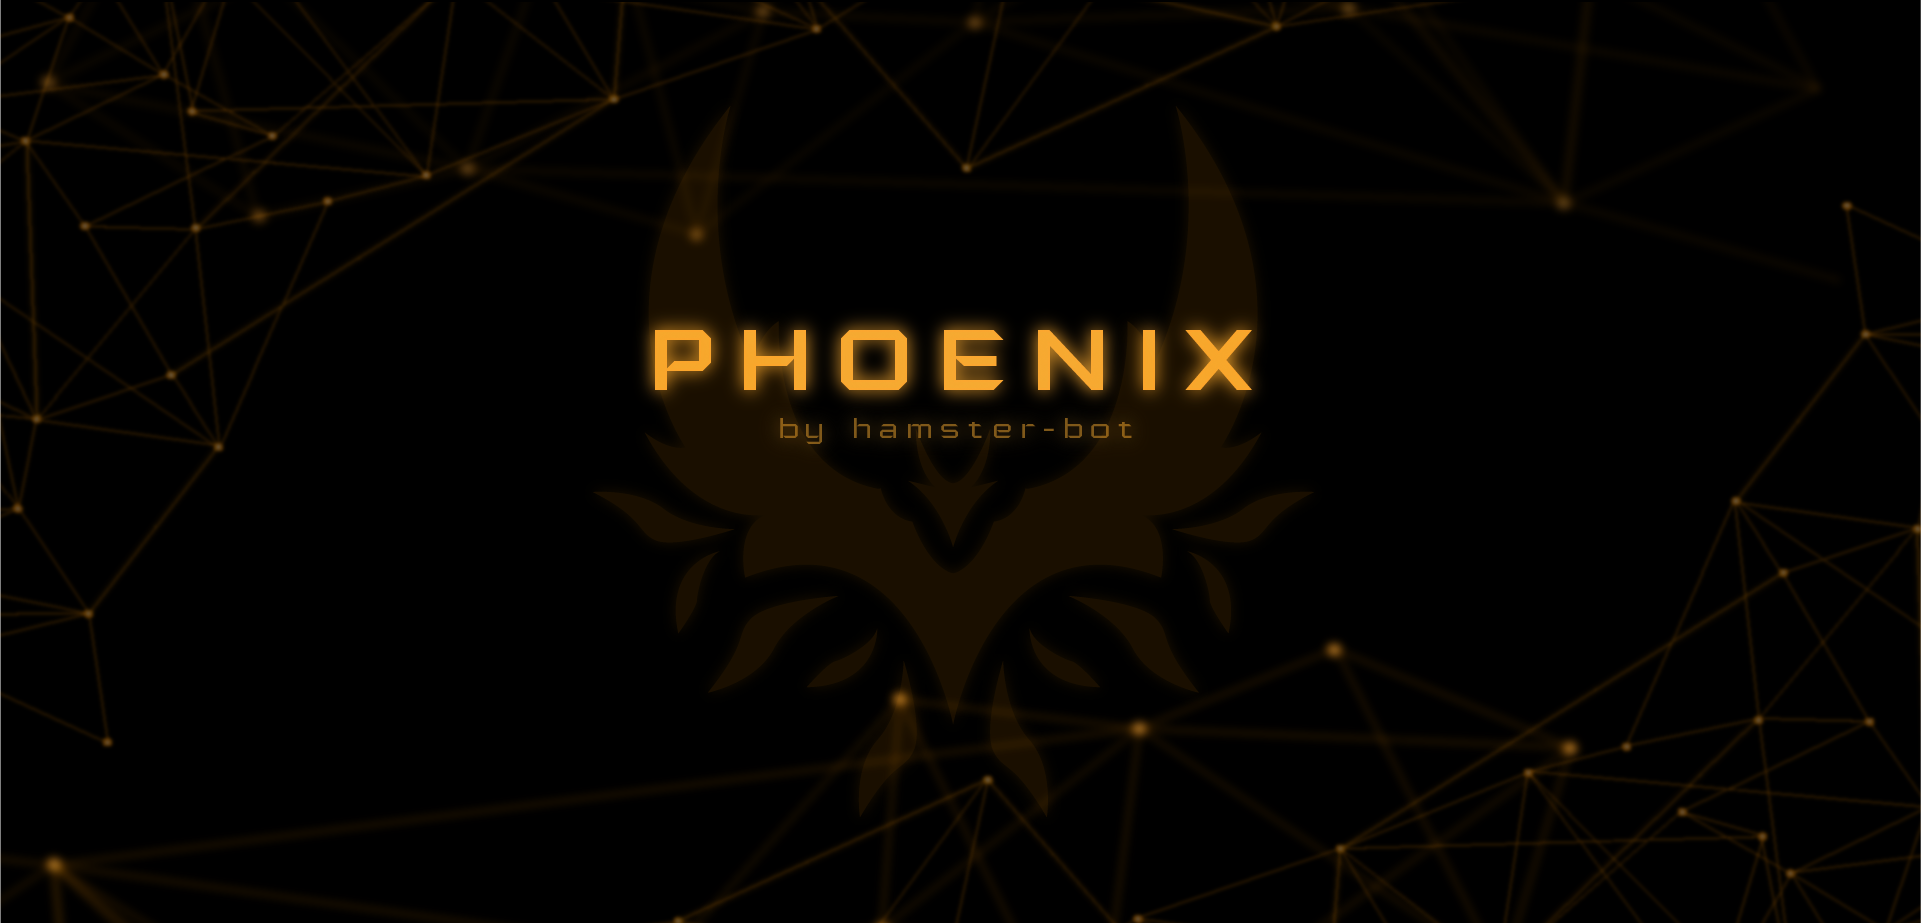 HODL BTC vs. PHOENIX by hamster-bot